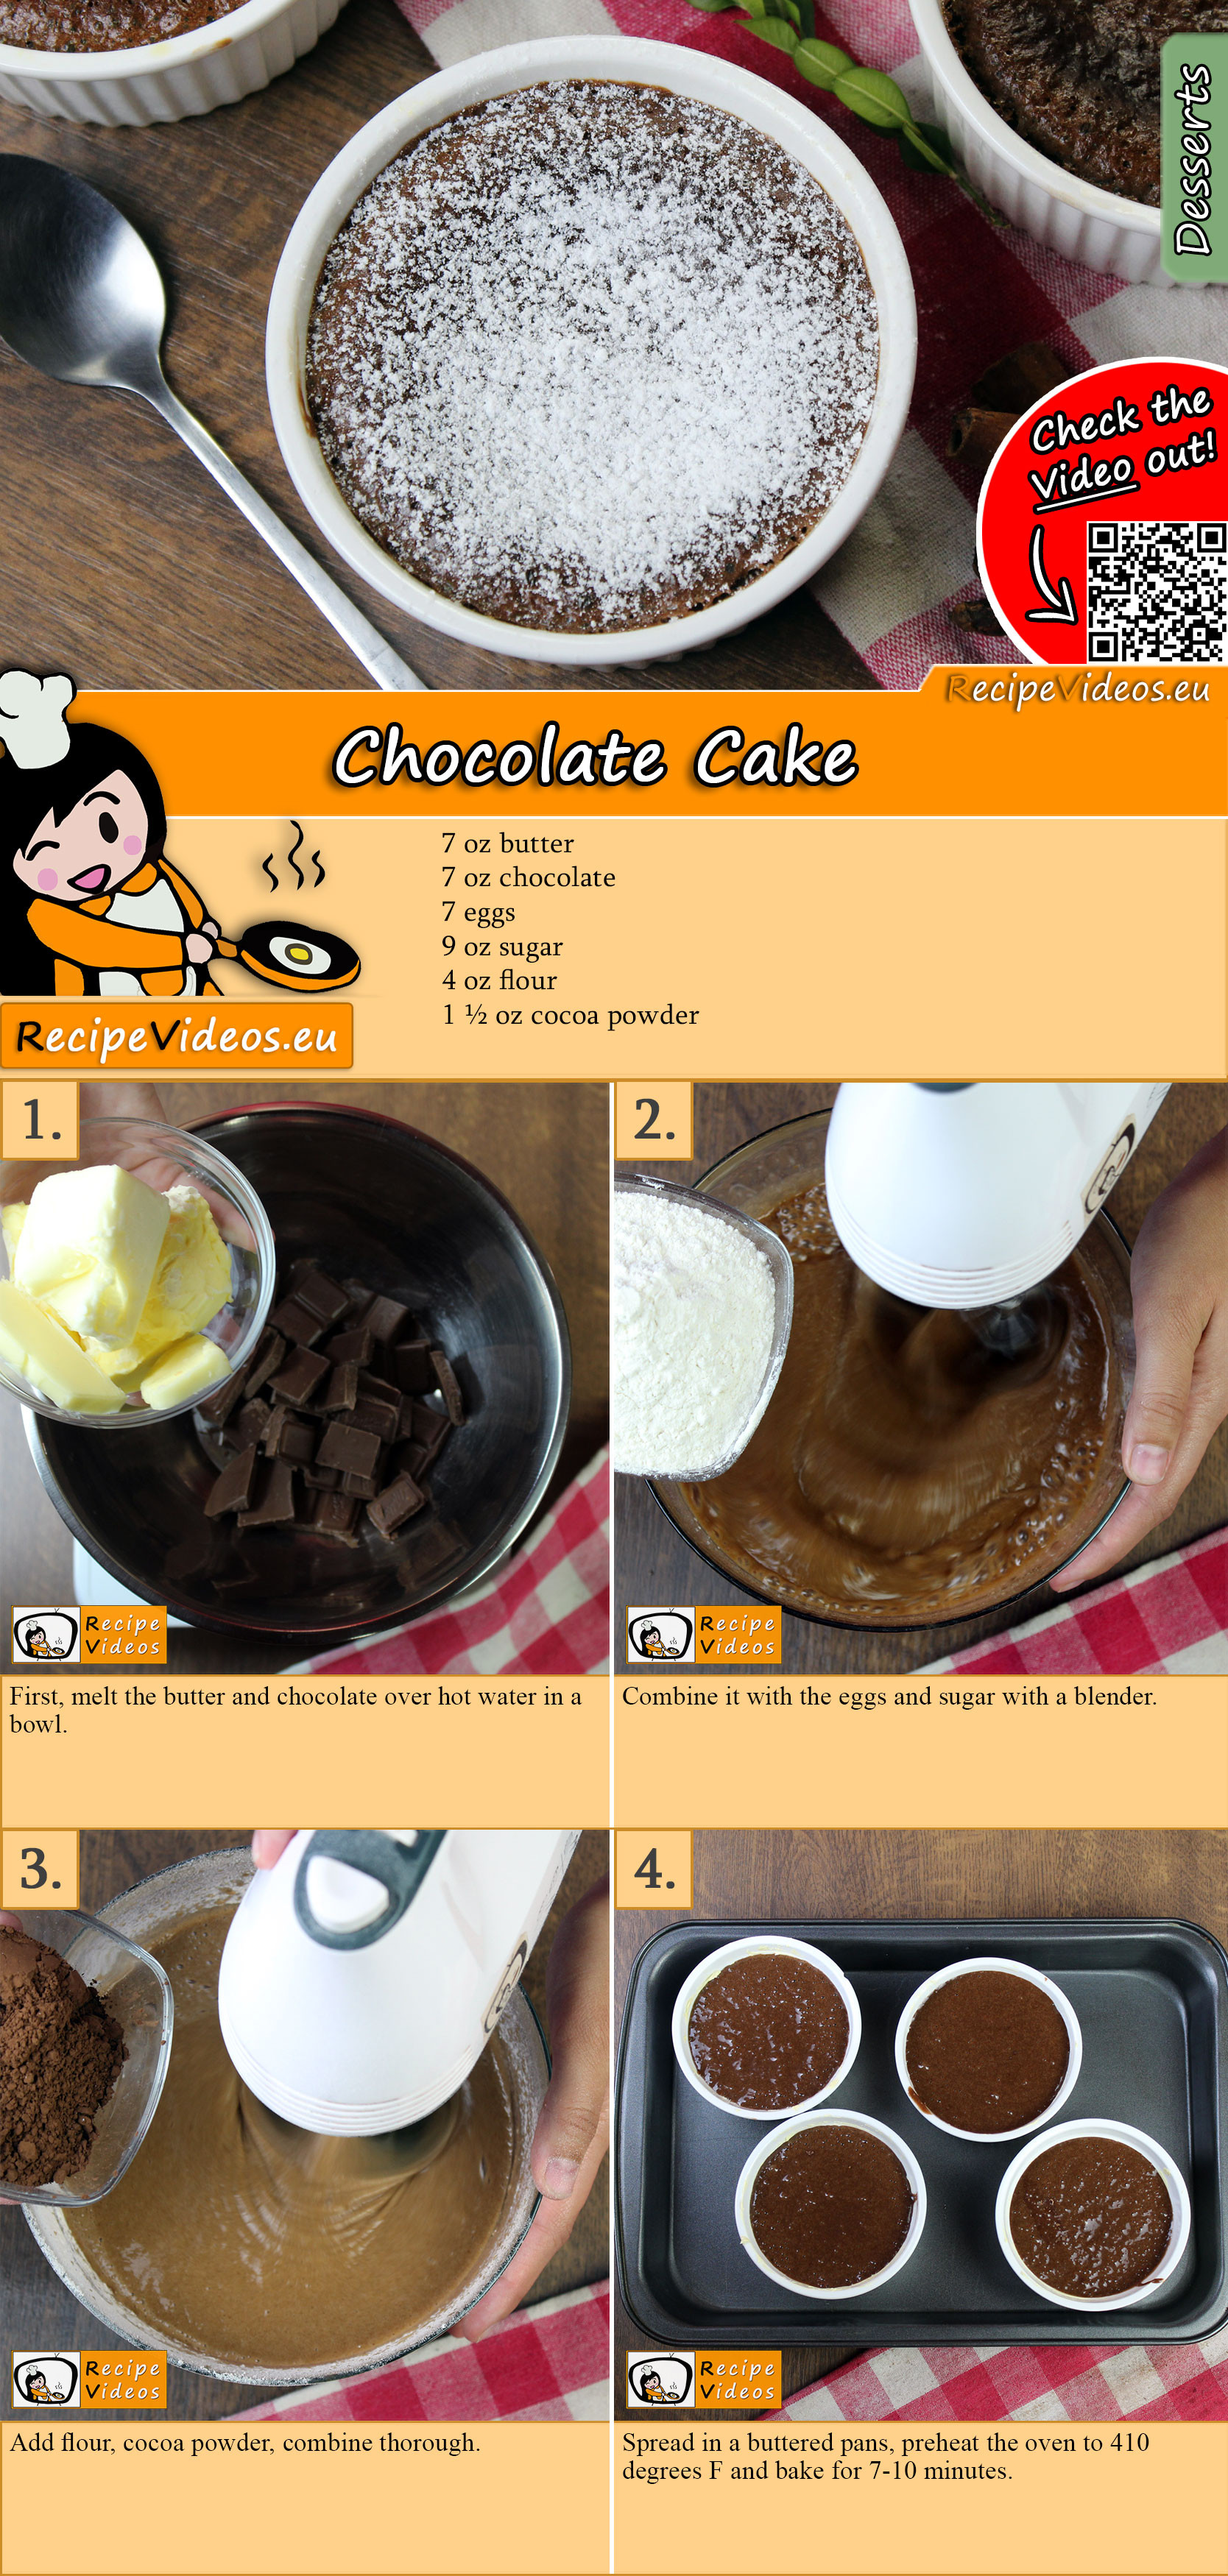 Chocolate cake recipe with video